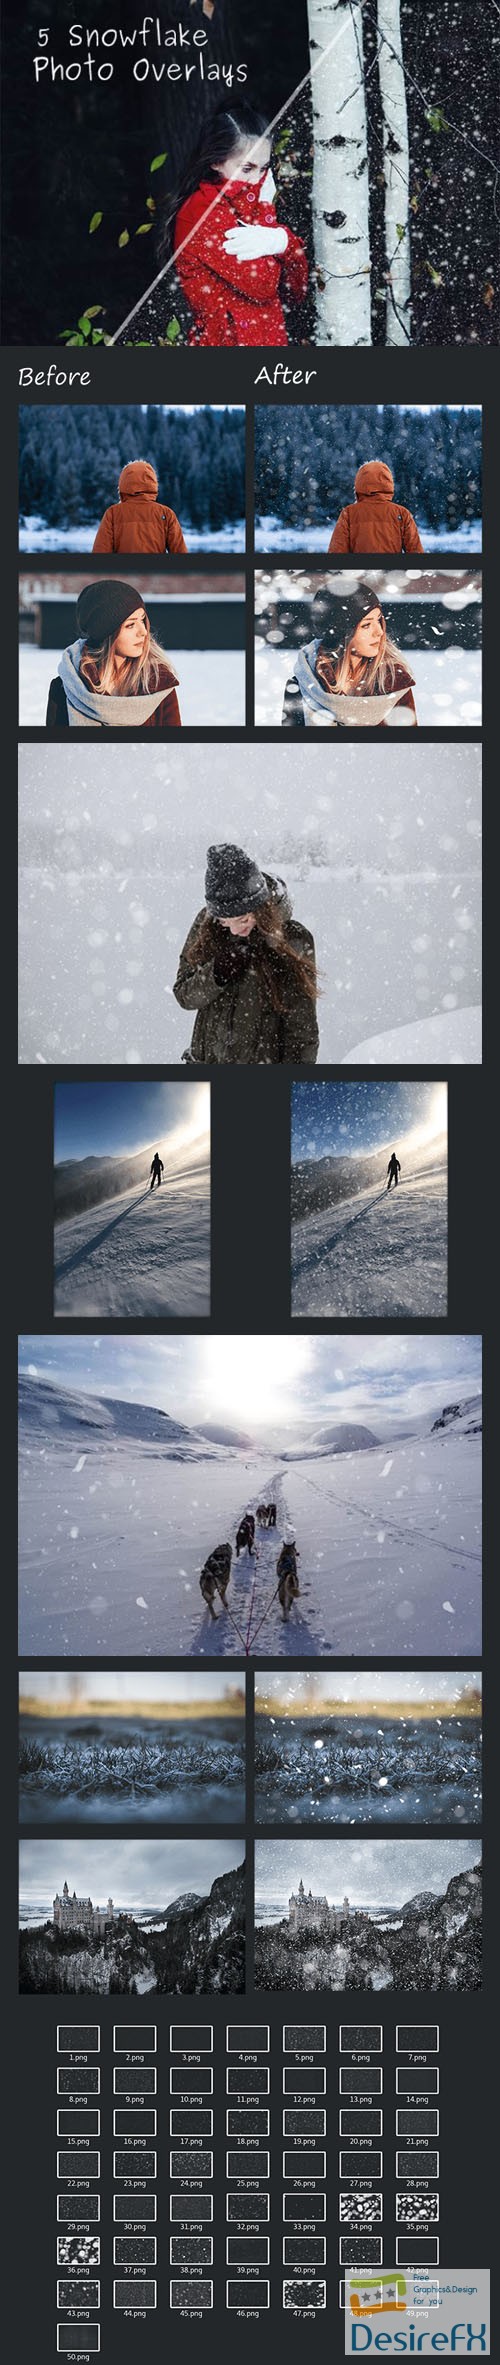 5 Snowflake Photo Overlays